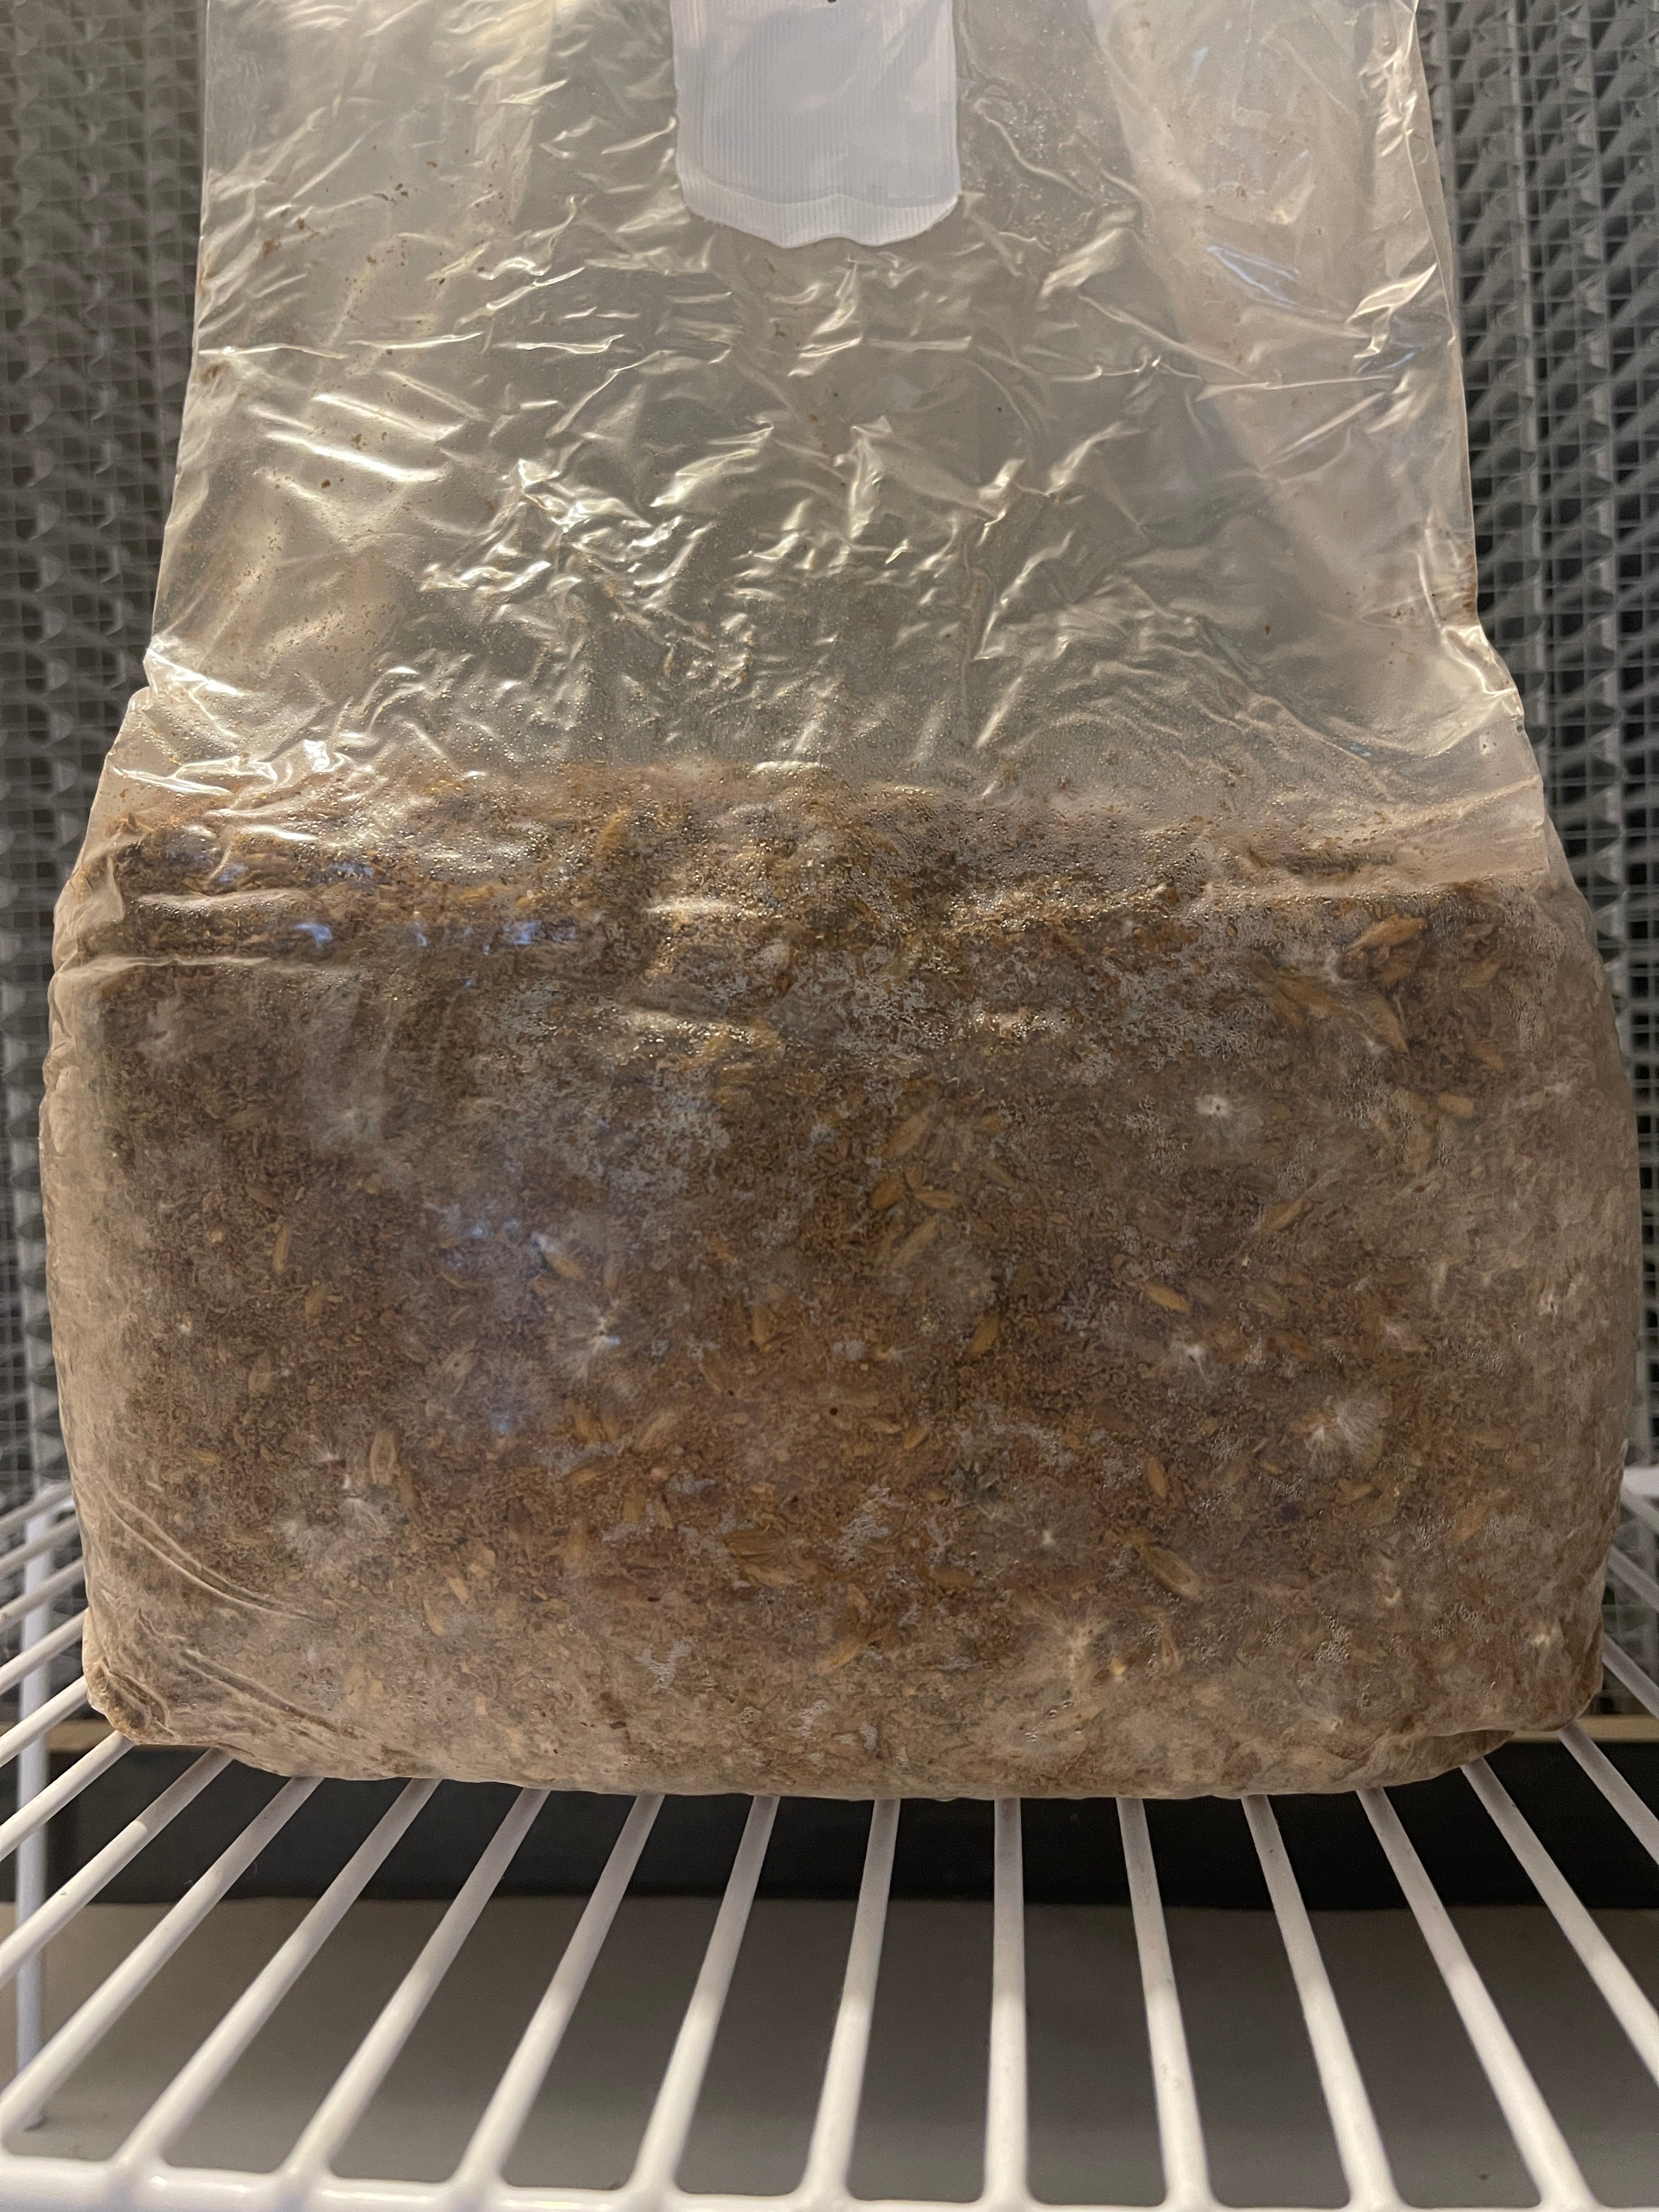 5lb Sawdust/Grain Spawn Mix